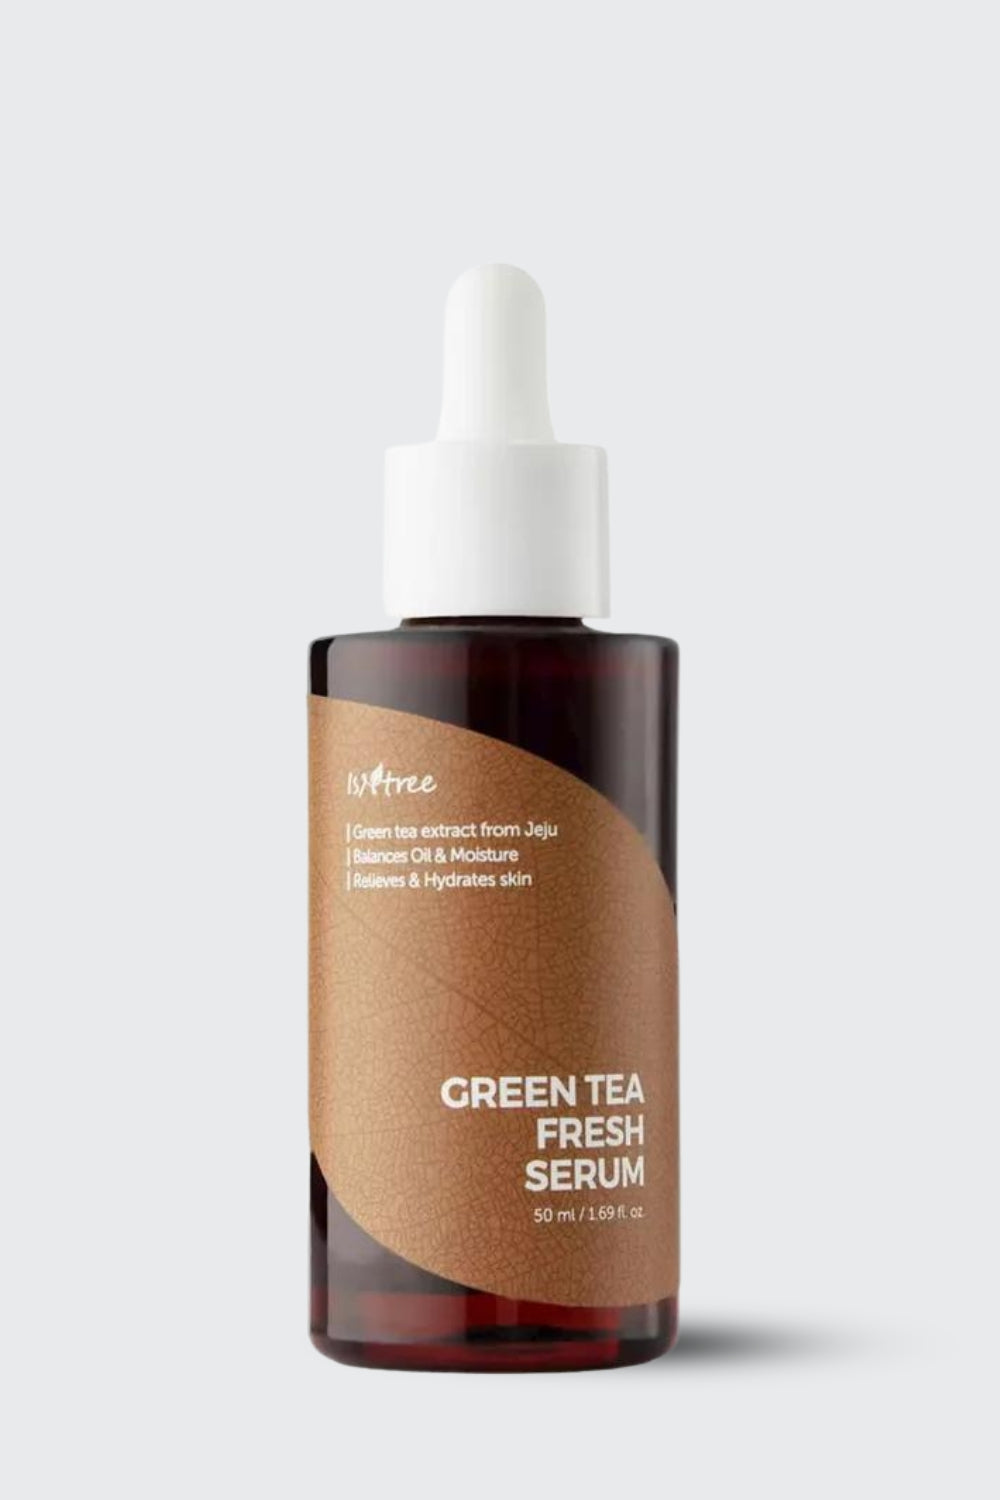 ISNTREE - Green Tea Fresh Serum - 50ml